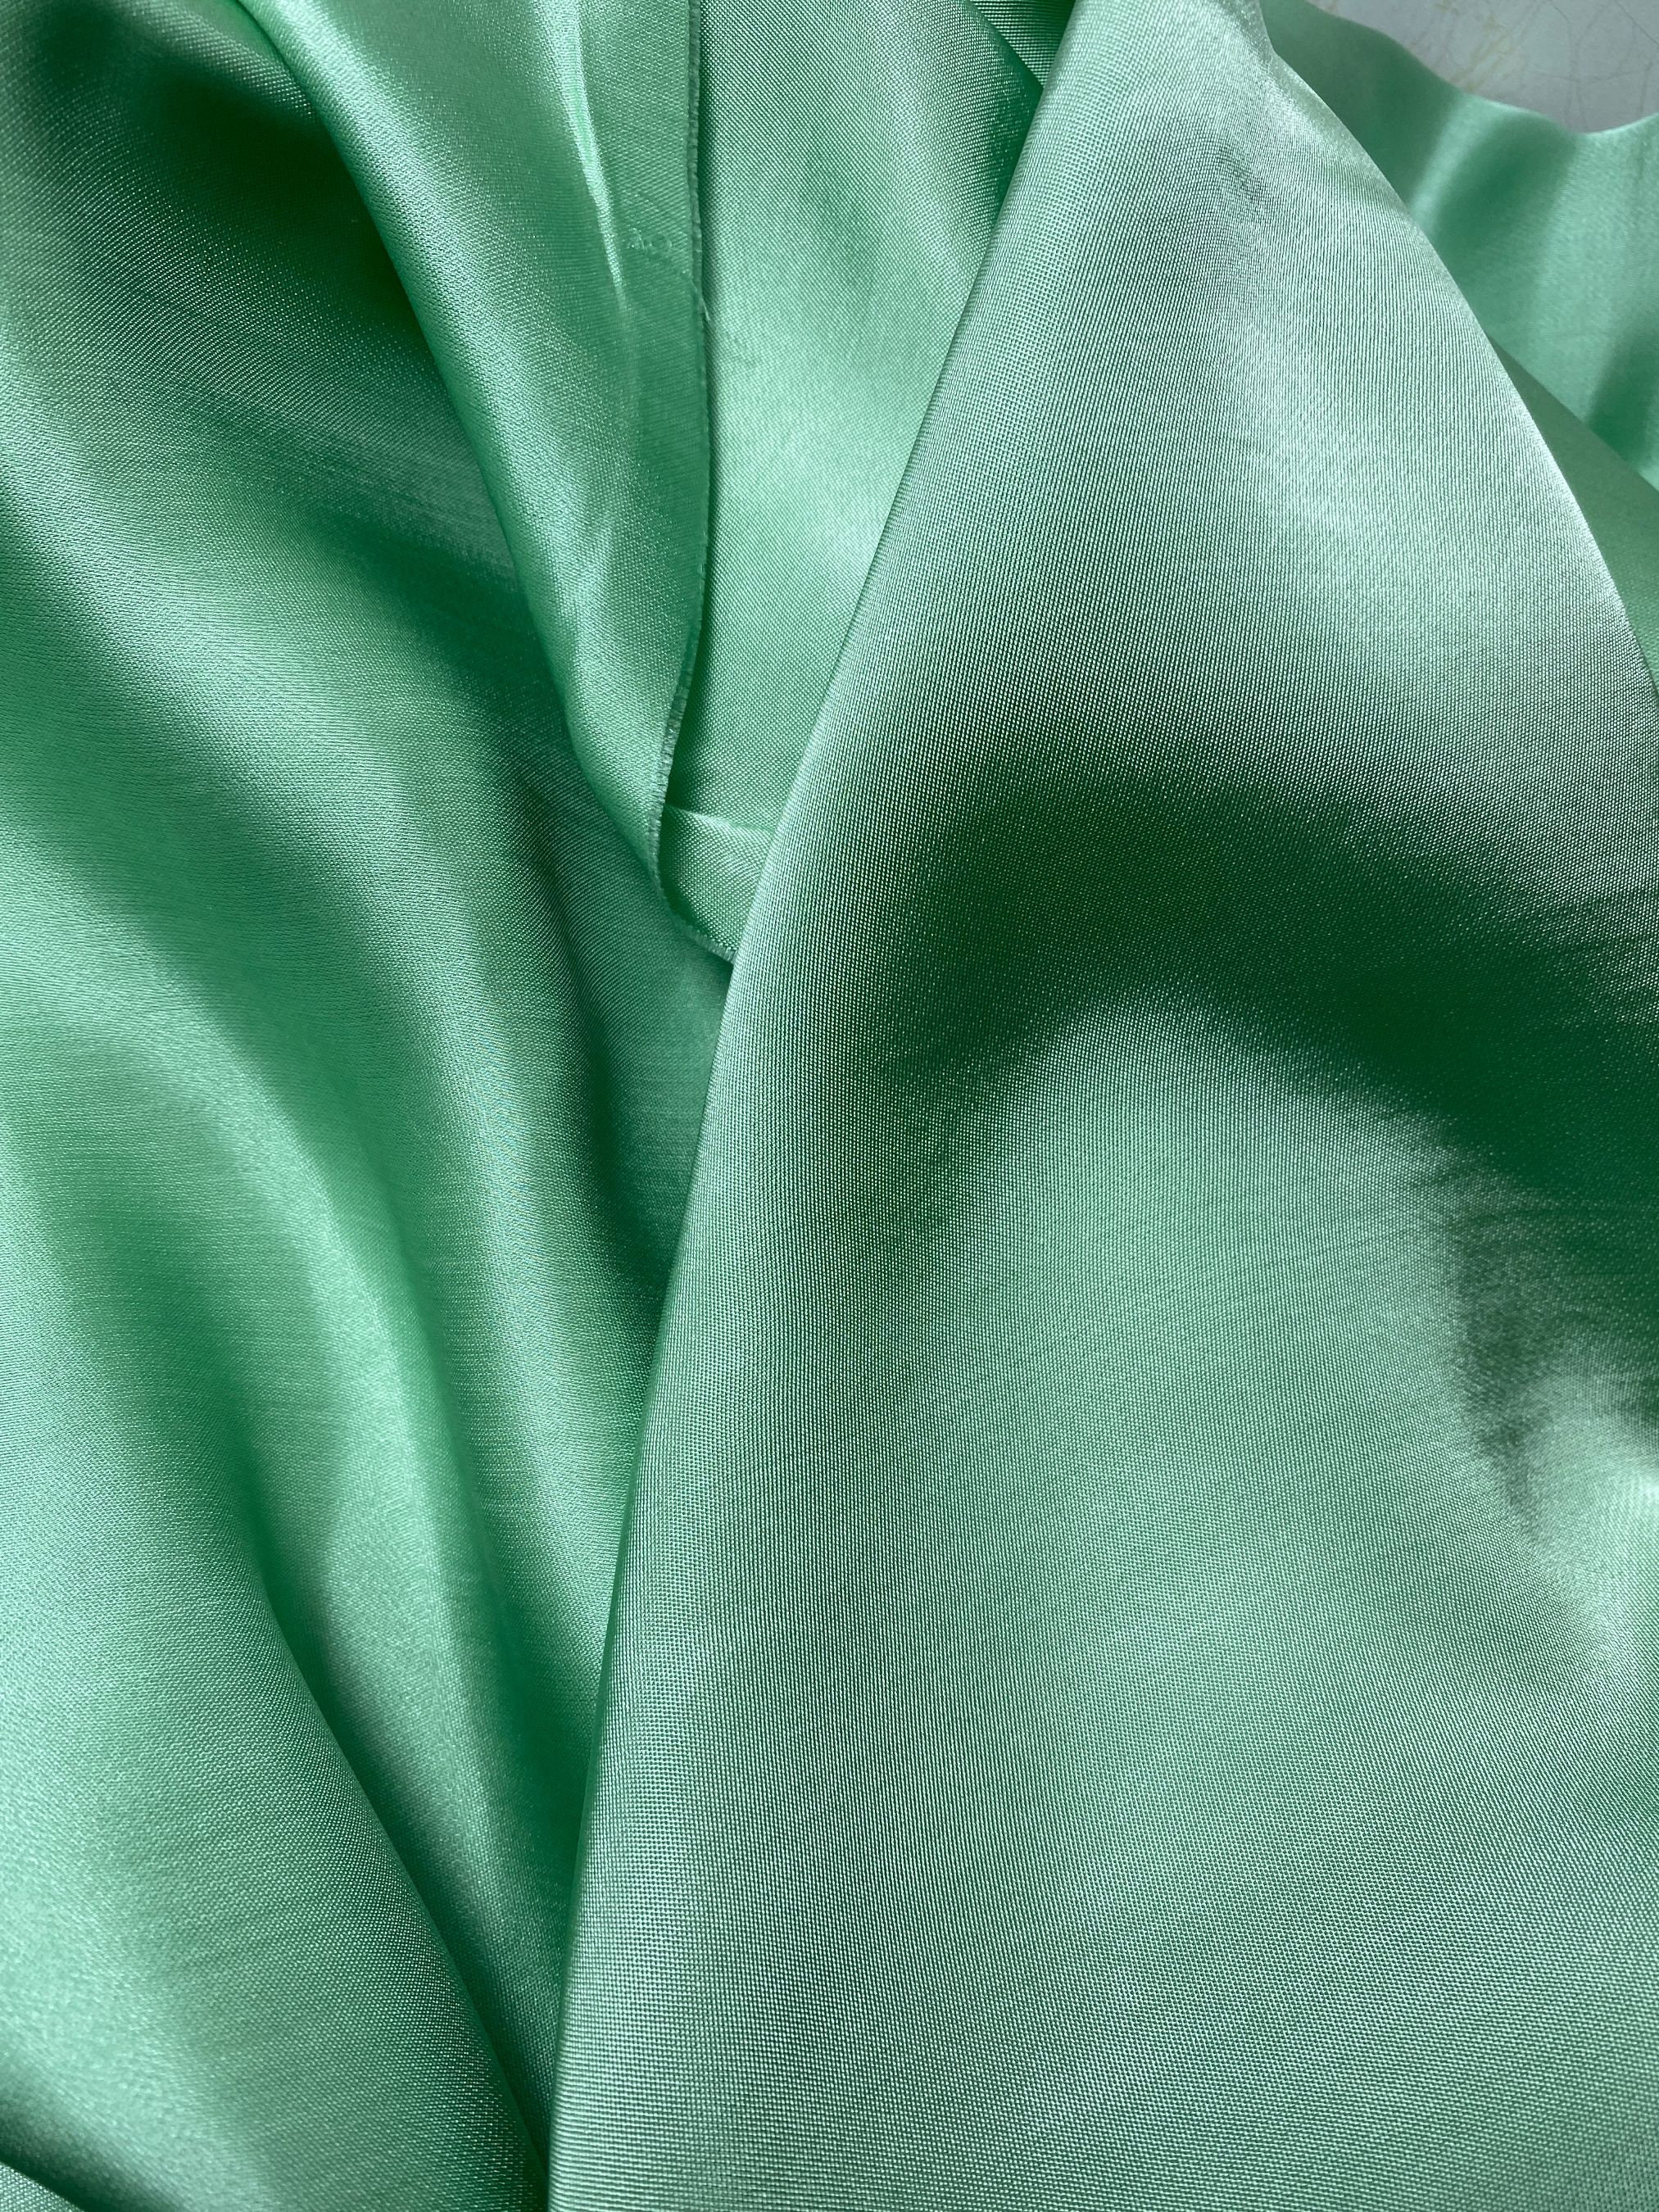 Silk Fabric, Gucci Grass Green Sueded Silk Satin Charmeuse (Made